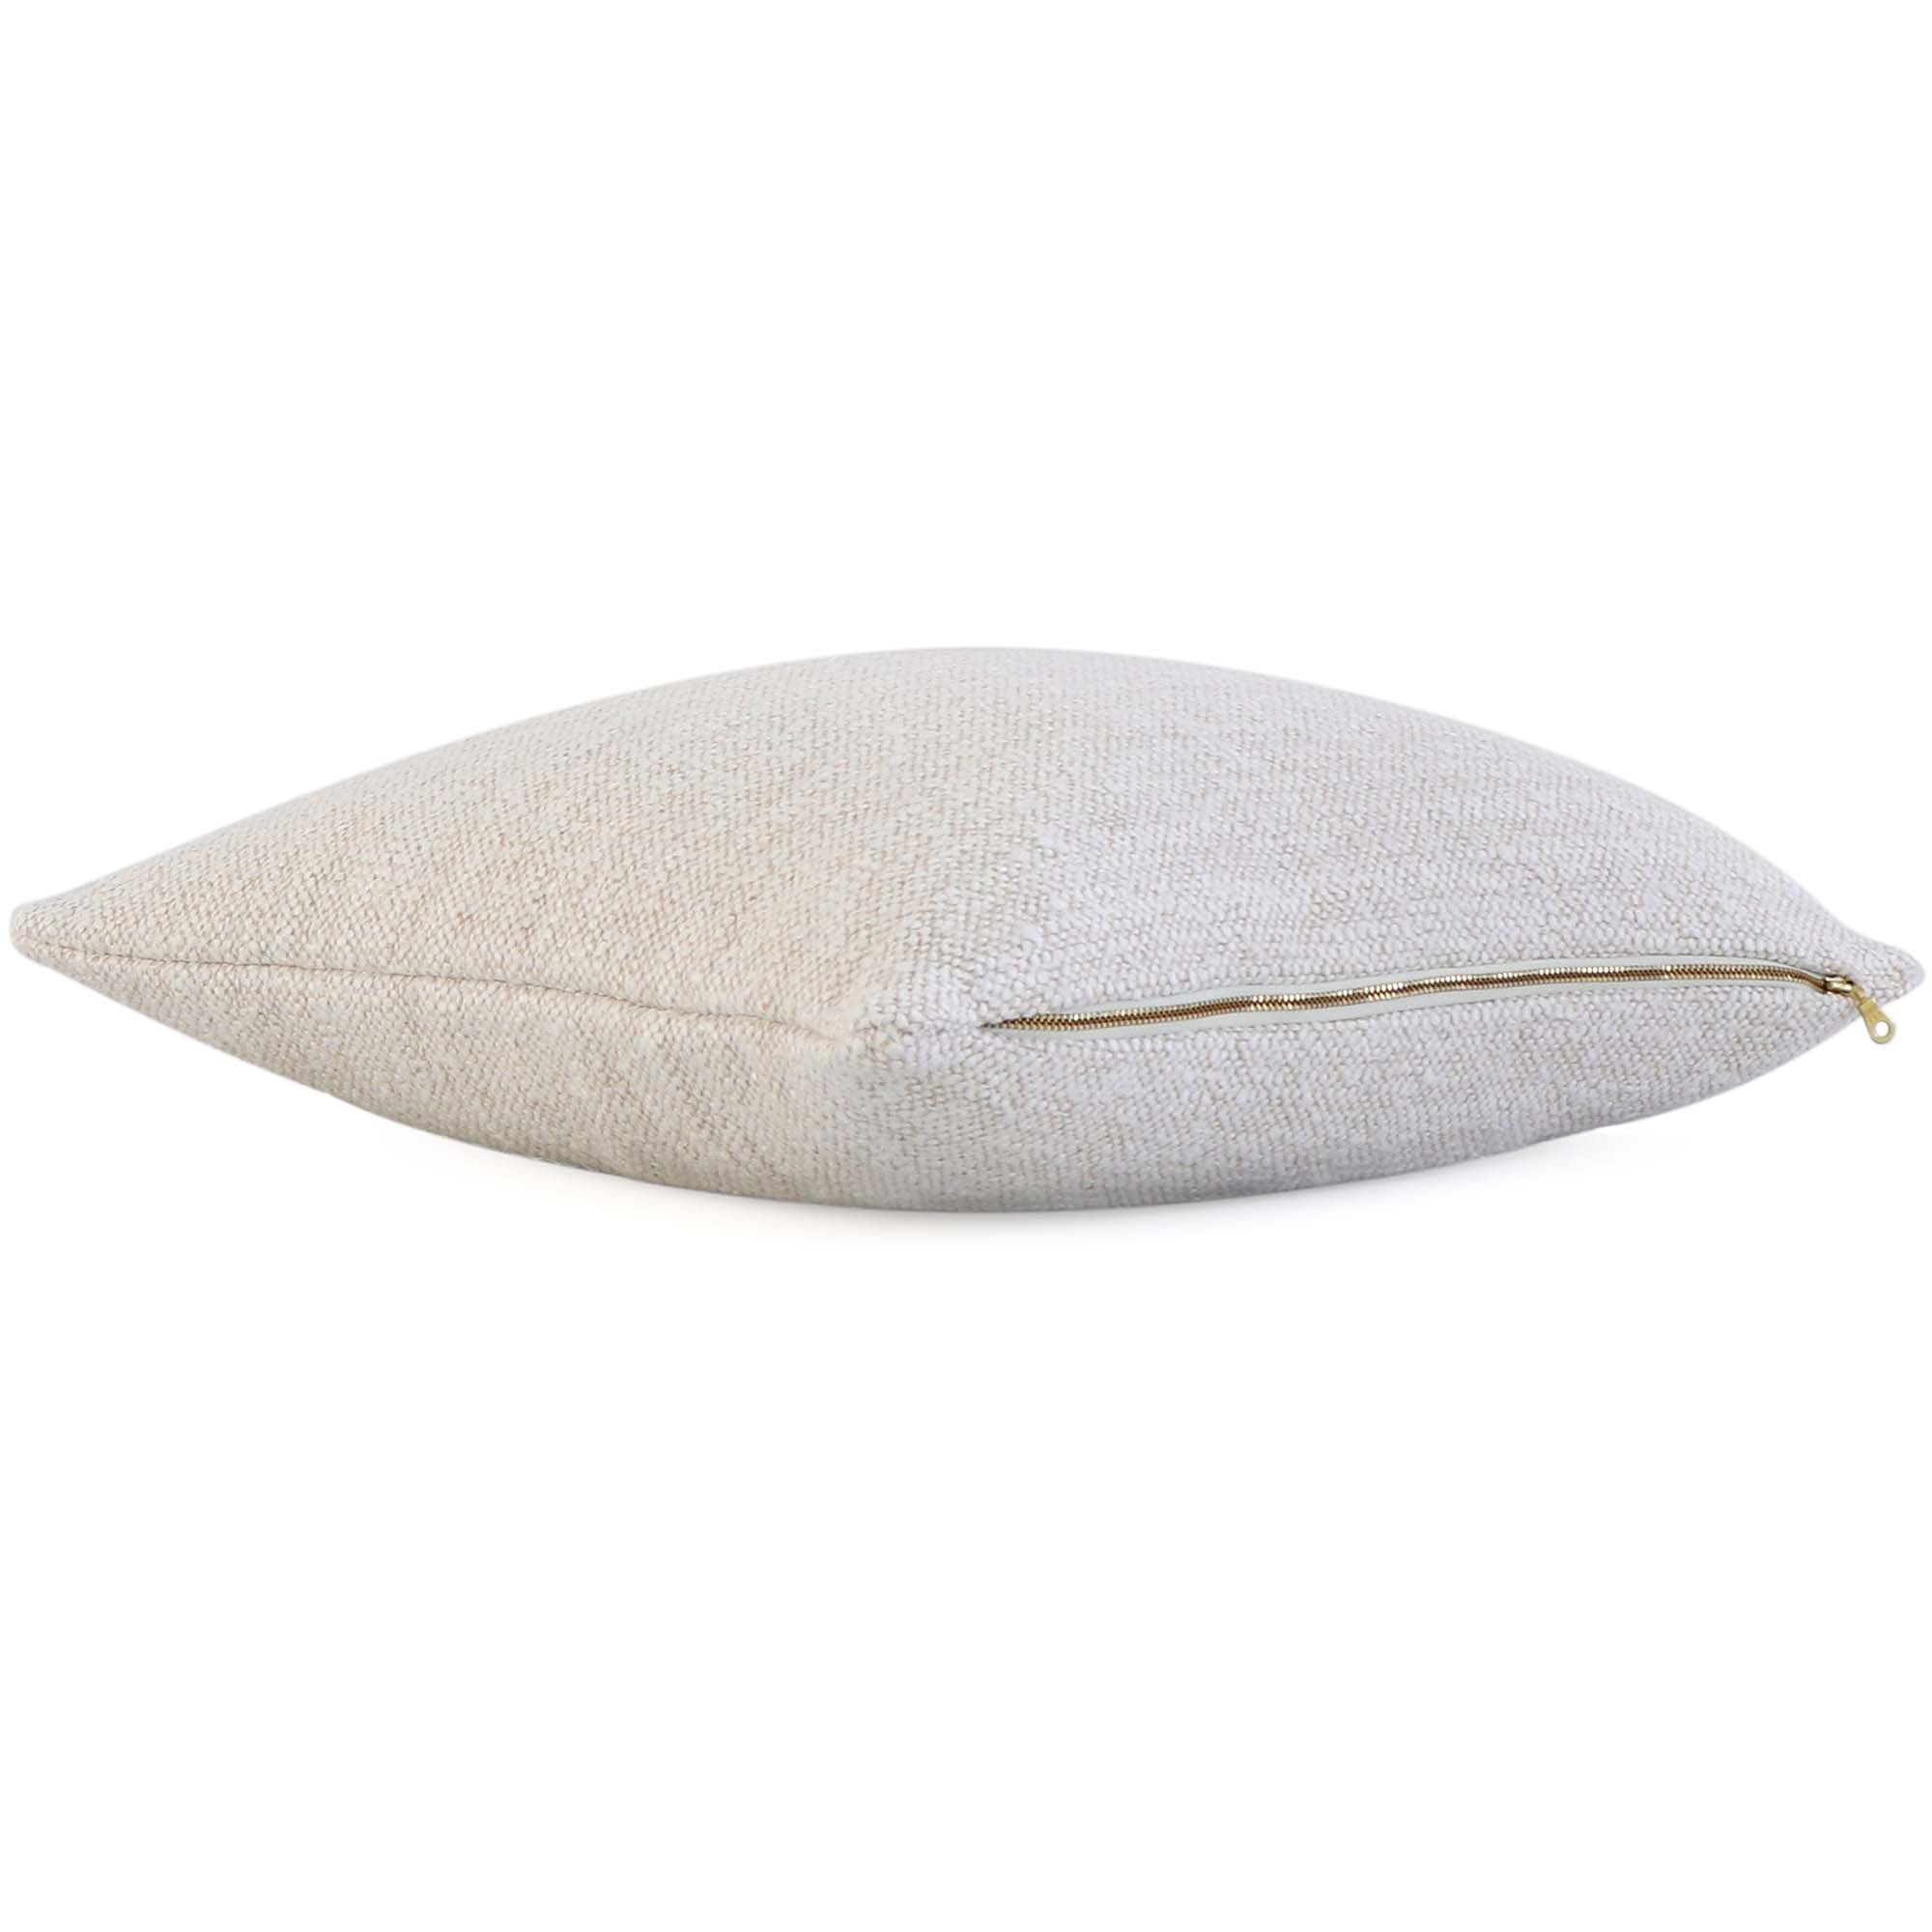 Stain Resistant! Sasso Parchment Neutral Textured Throw Pillow